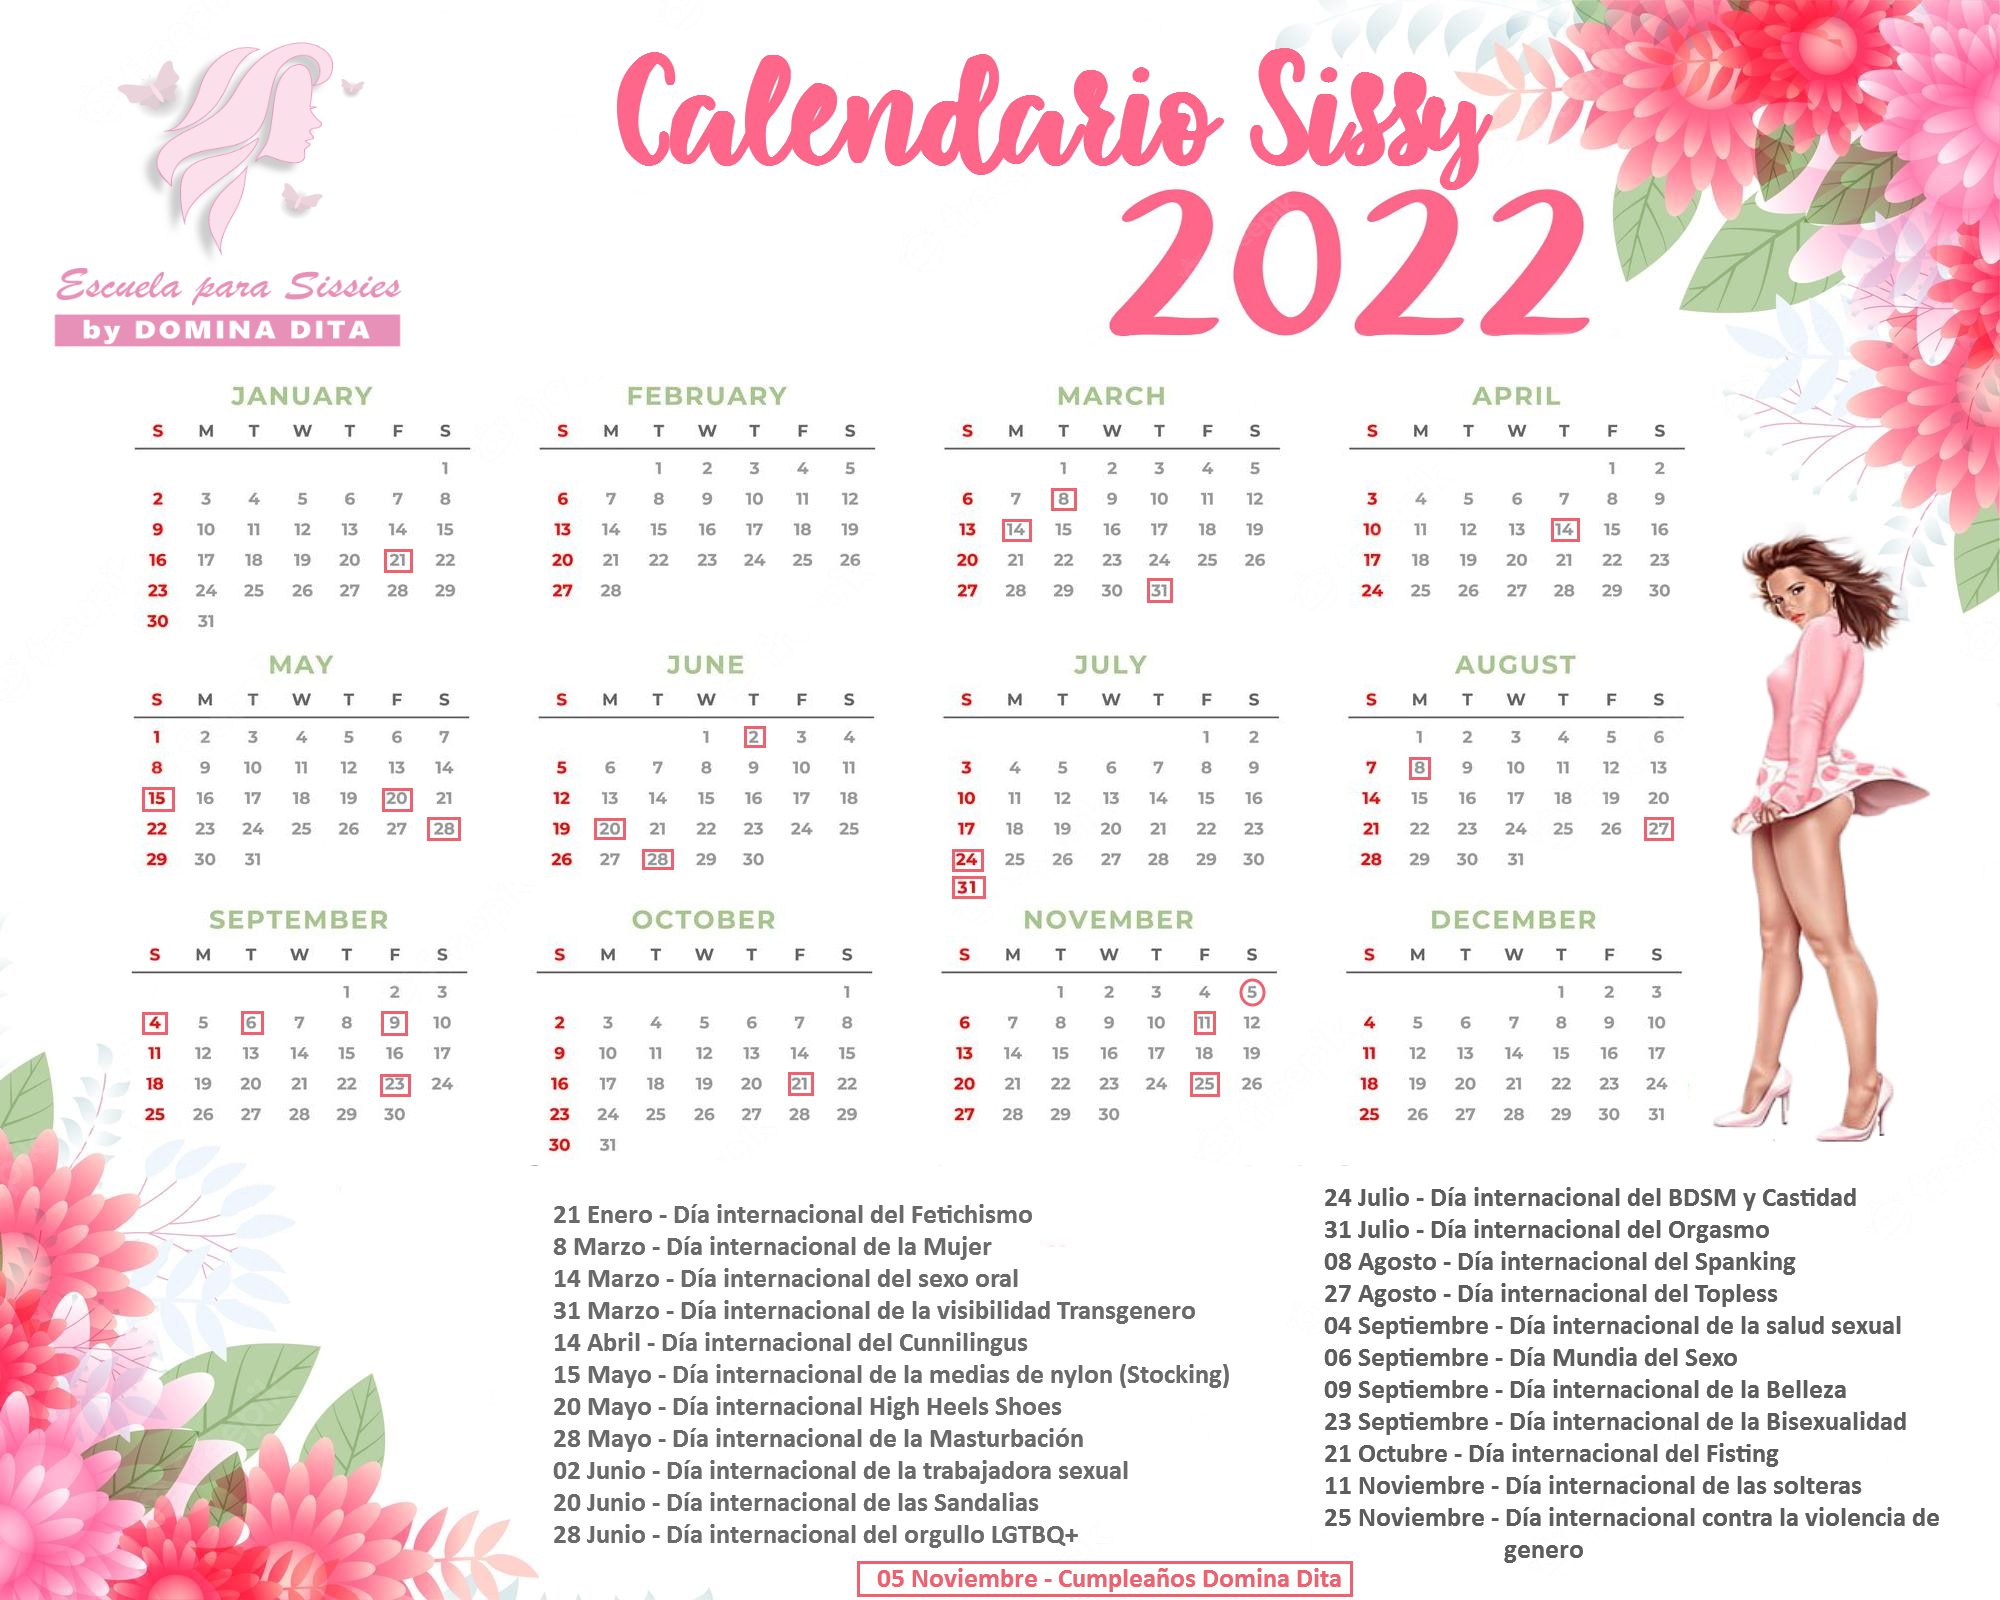 Calendario sissy 2022 – Escuela para sissies